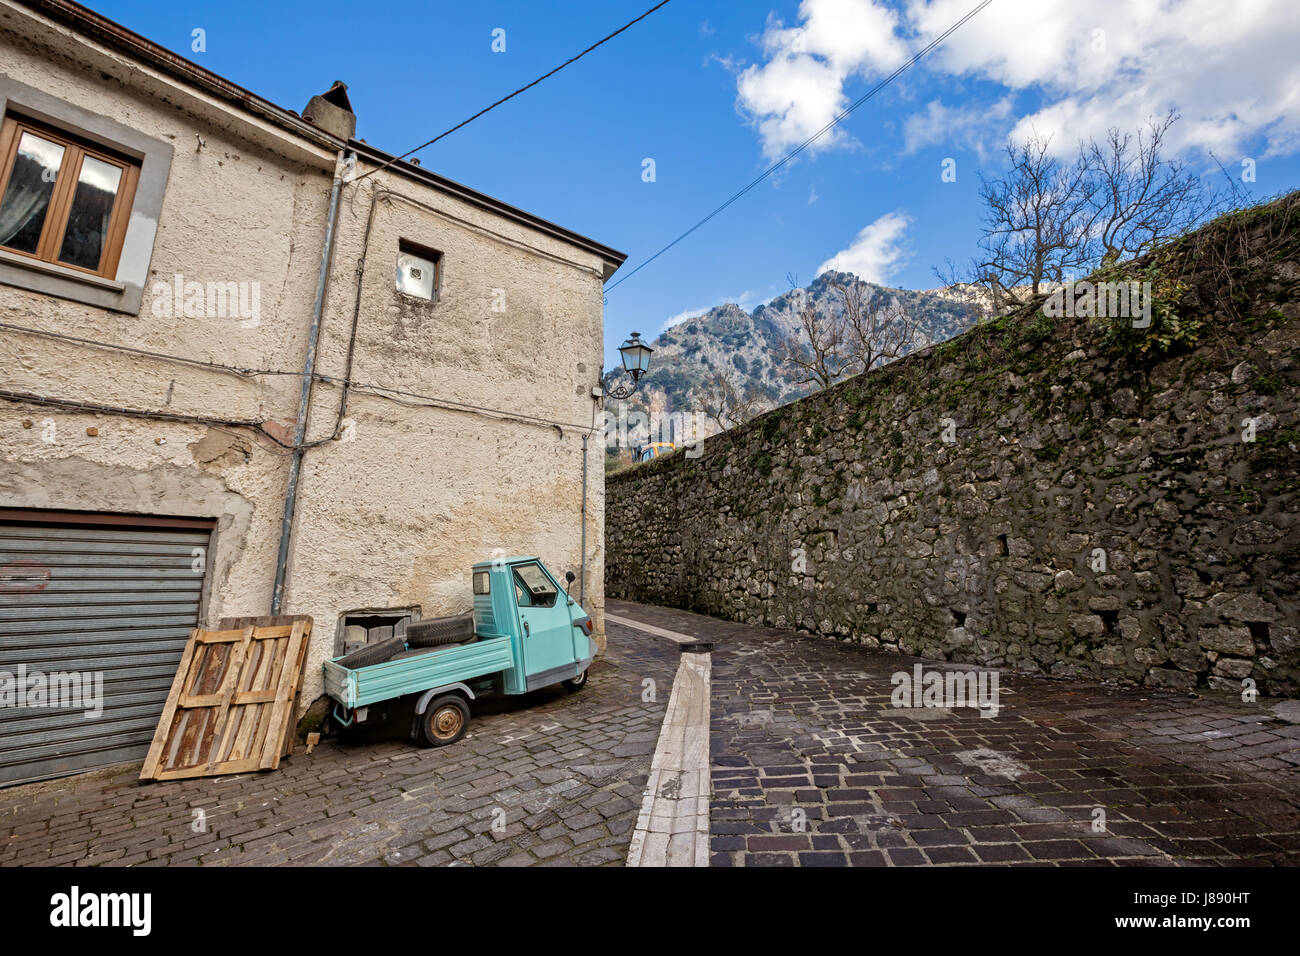 Cervinara (Avellino) - The old city centre and Taburno mountain Stock Photo